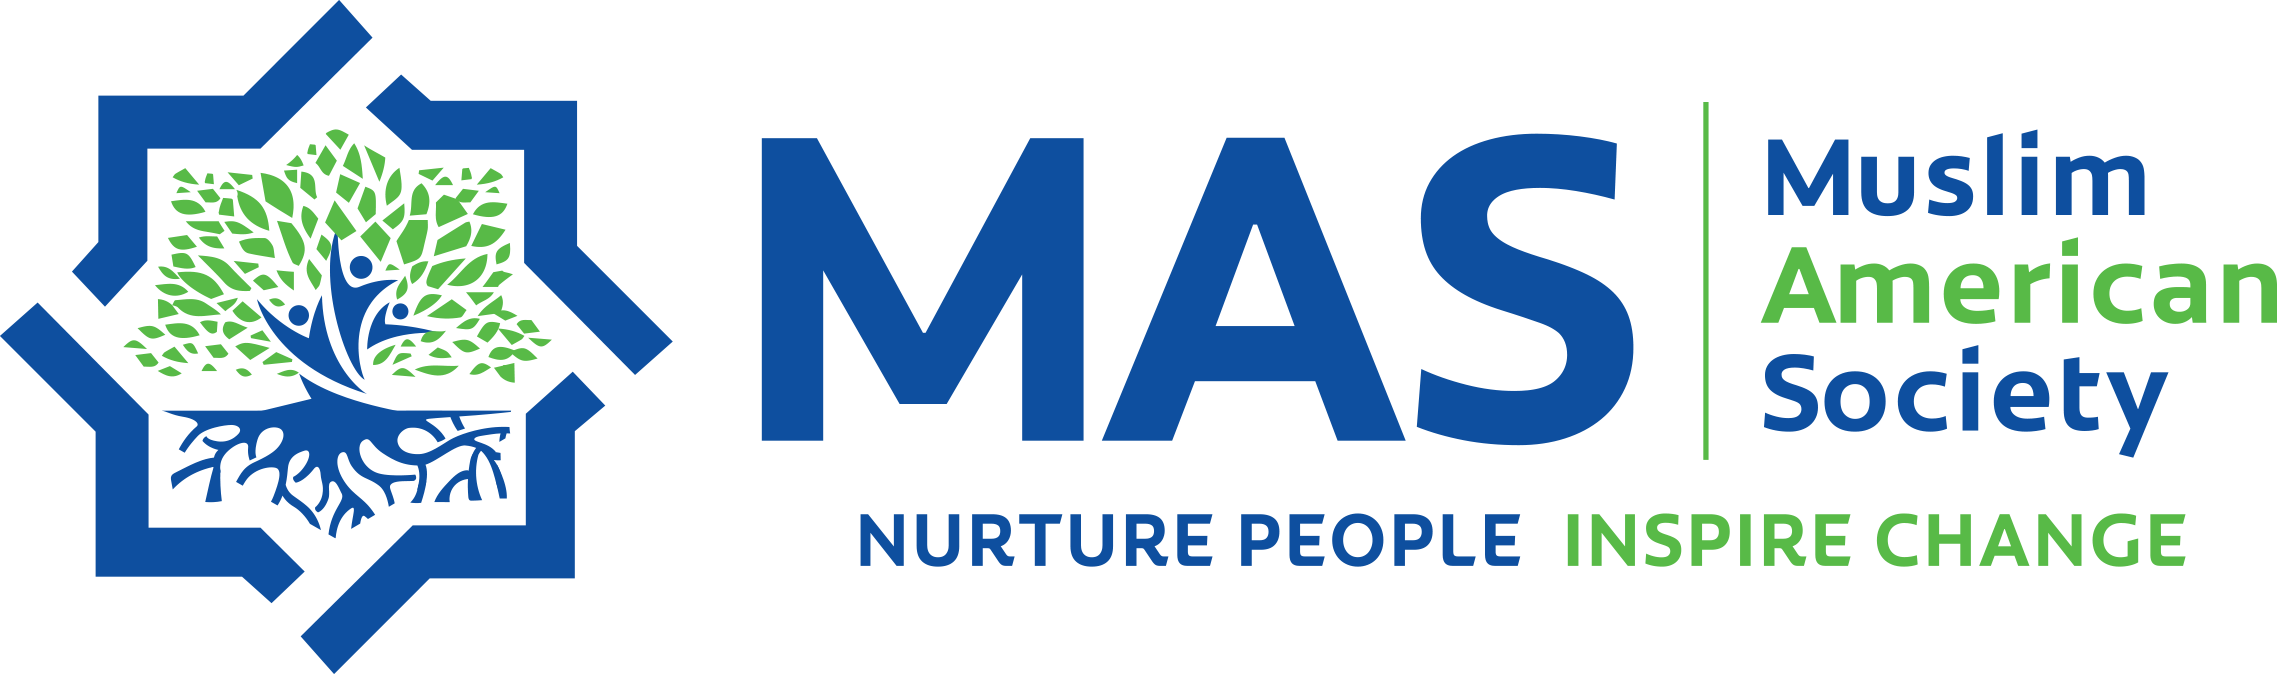 MAS Logo + Abbreviation + Name + Tagline Horizontal.png